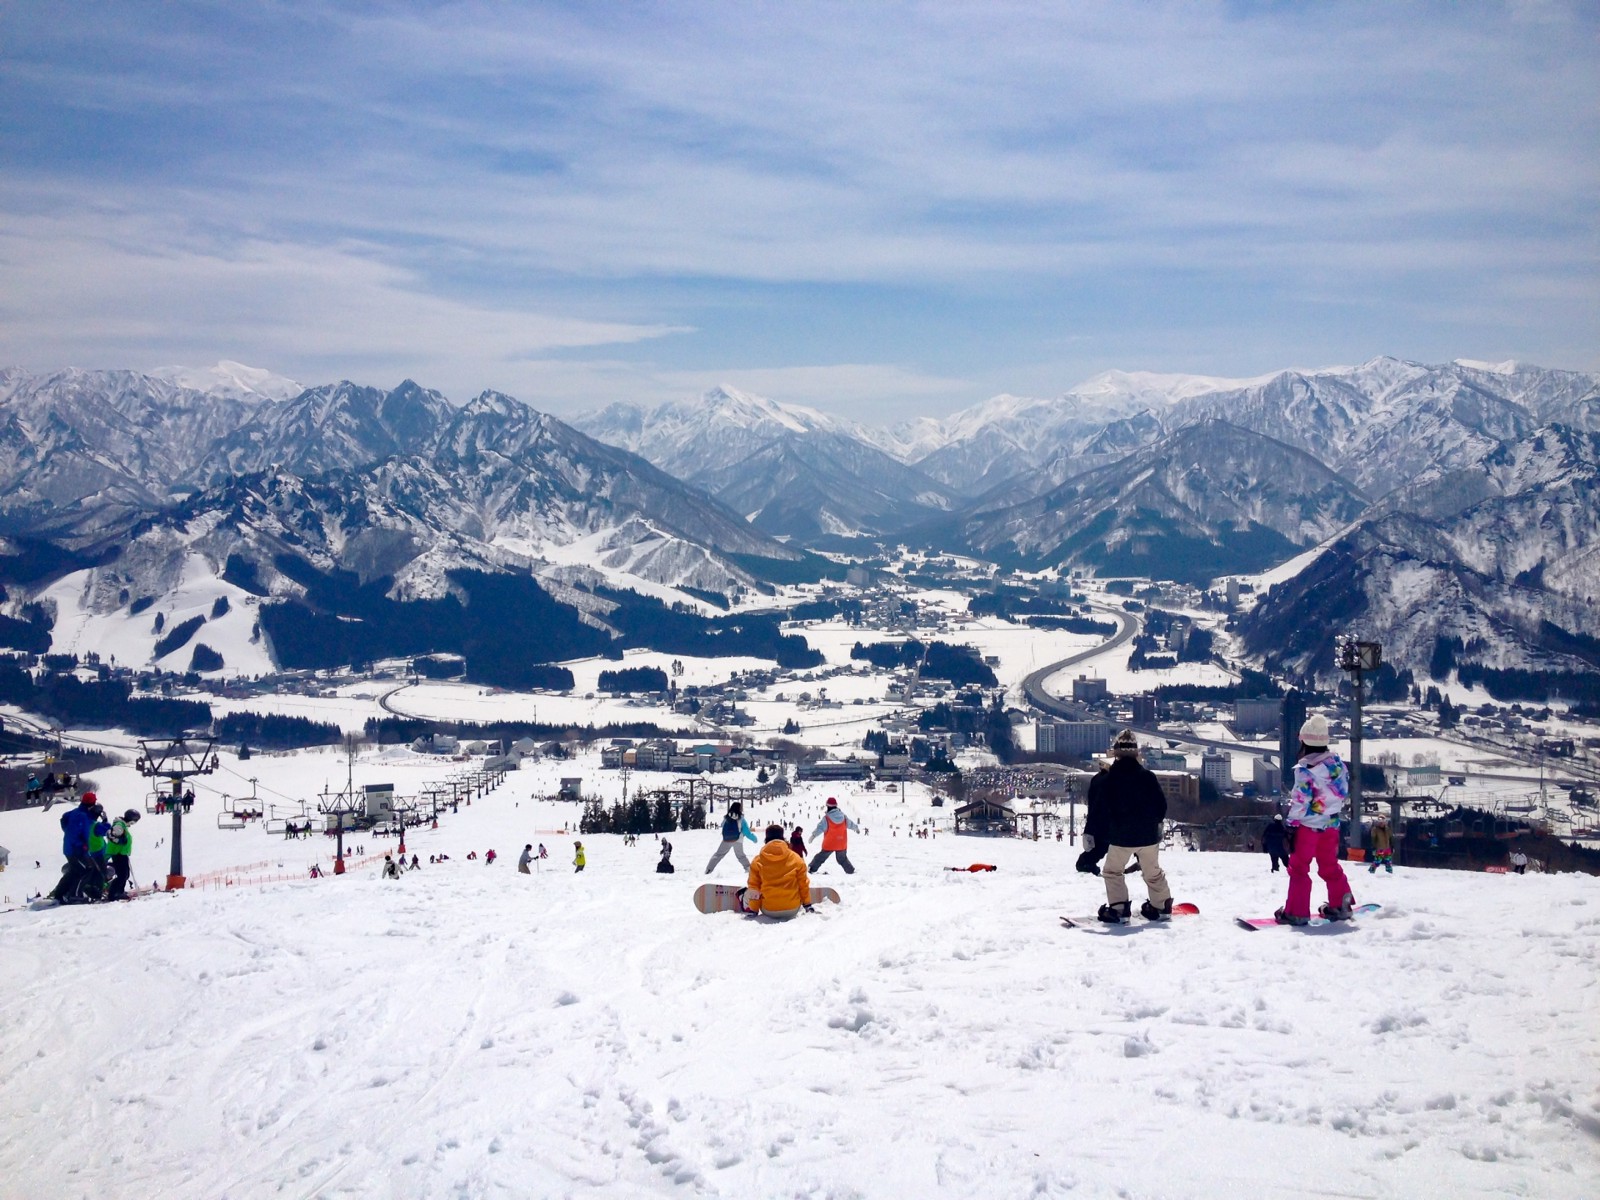 The world-class ski resort in Japan